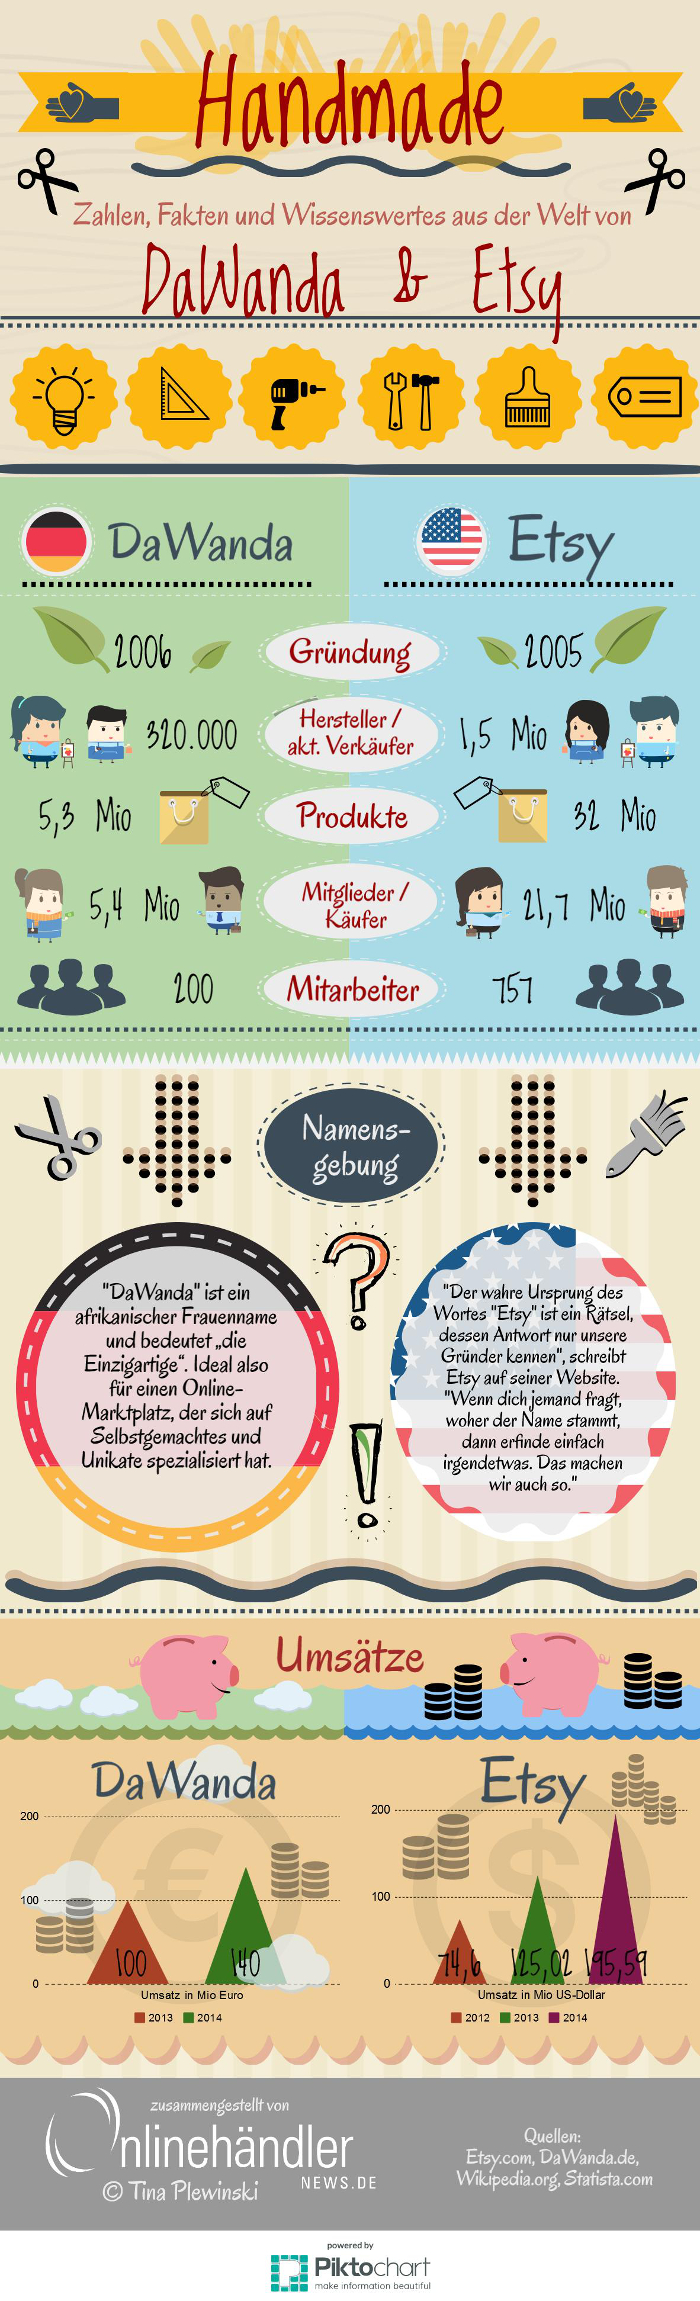 Piktochart-Infografik: Handmade - Etsy und Dawanda